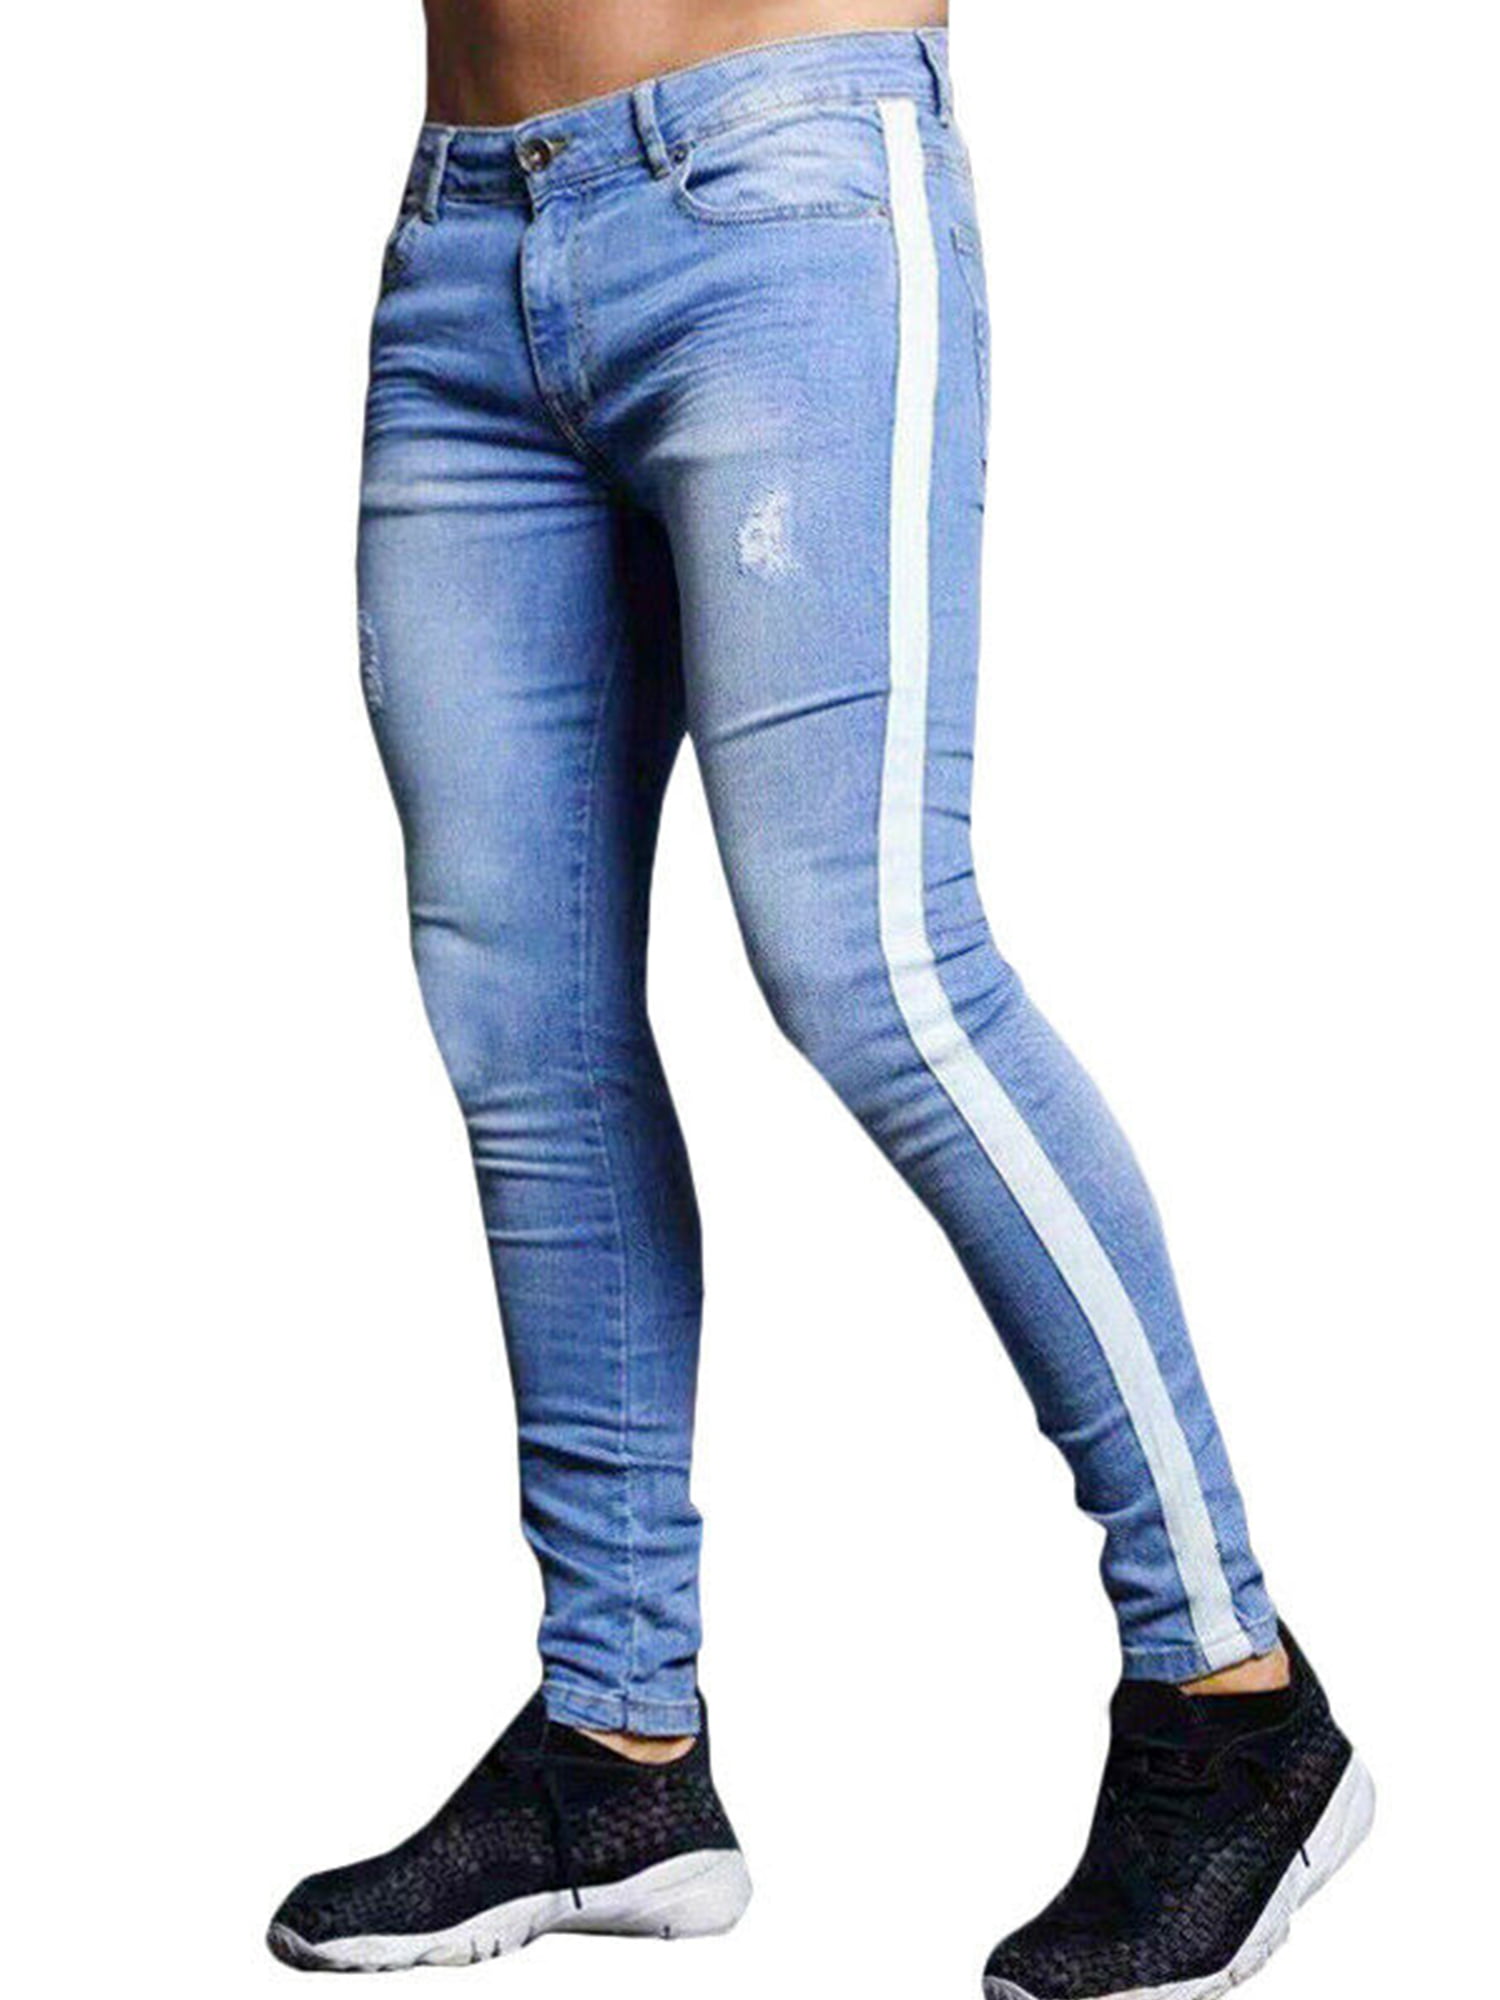 Lallc - Men's Striped Jegging Skinny Jeans Ripped Denim Pants Frayed ...